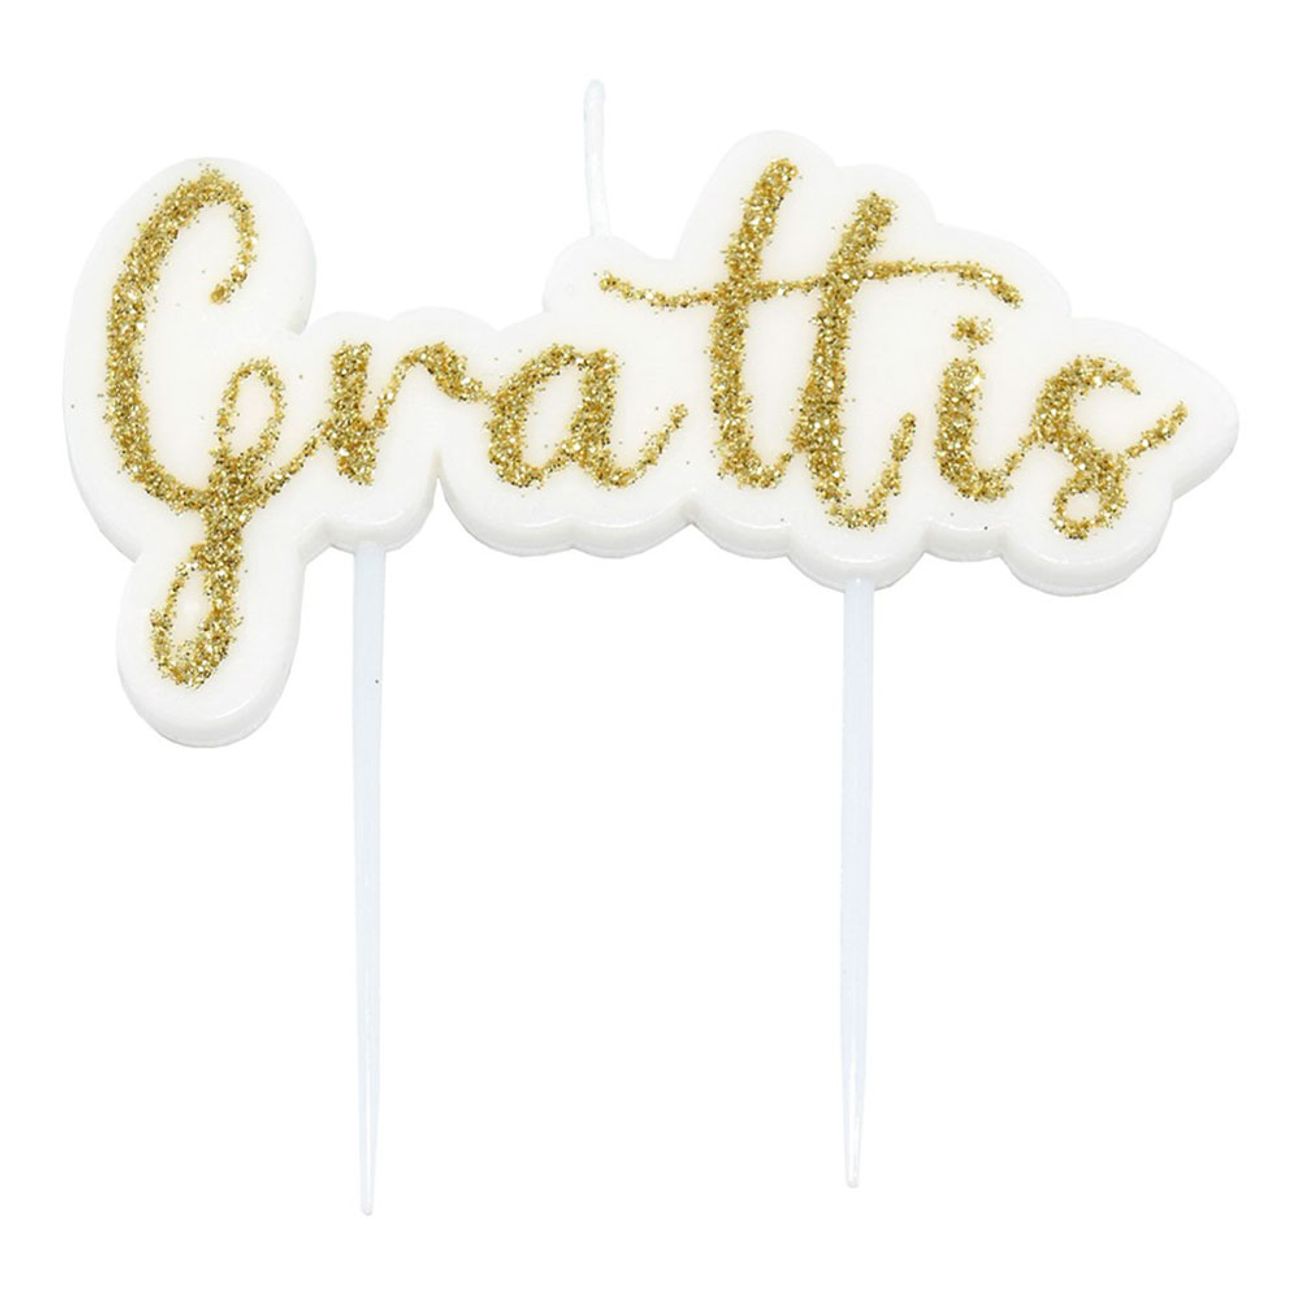 tartljus-grattis-guld-glitter-83300-1